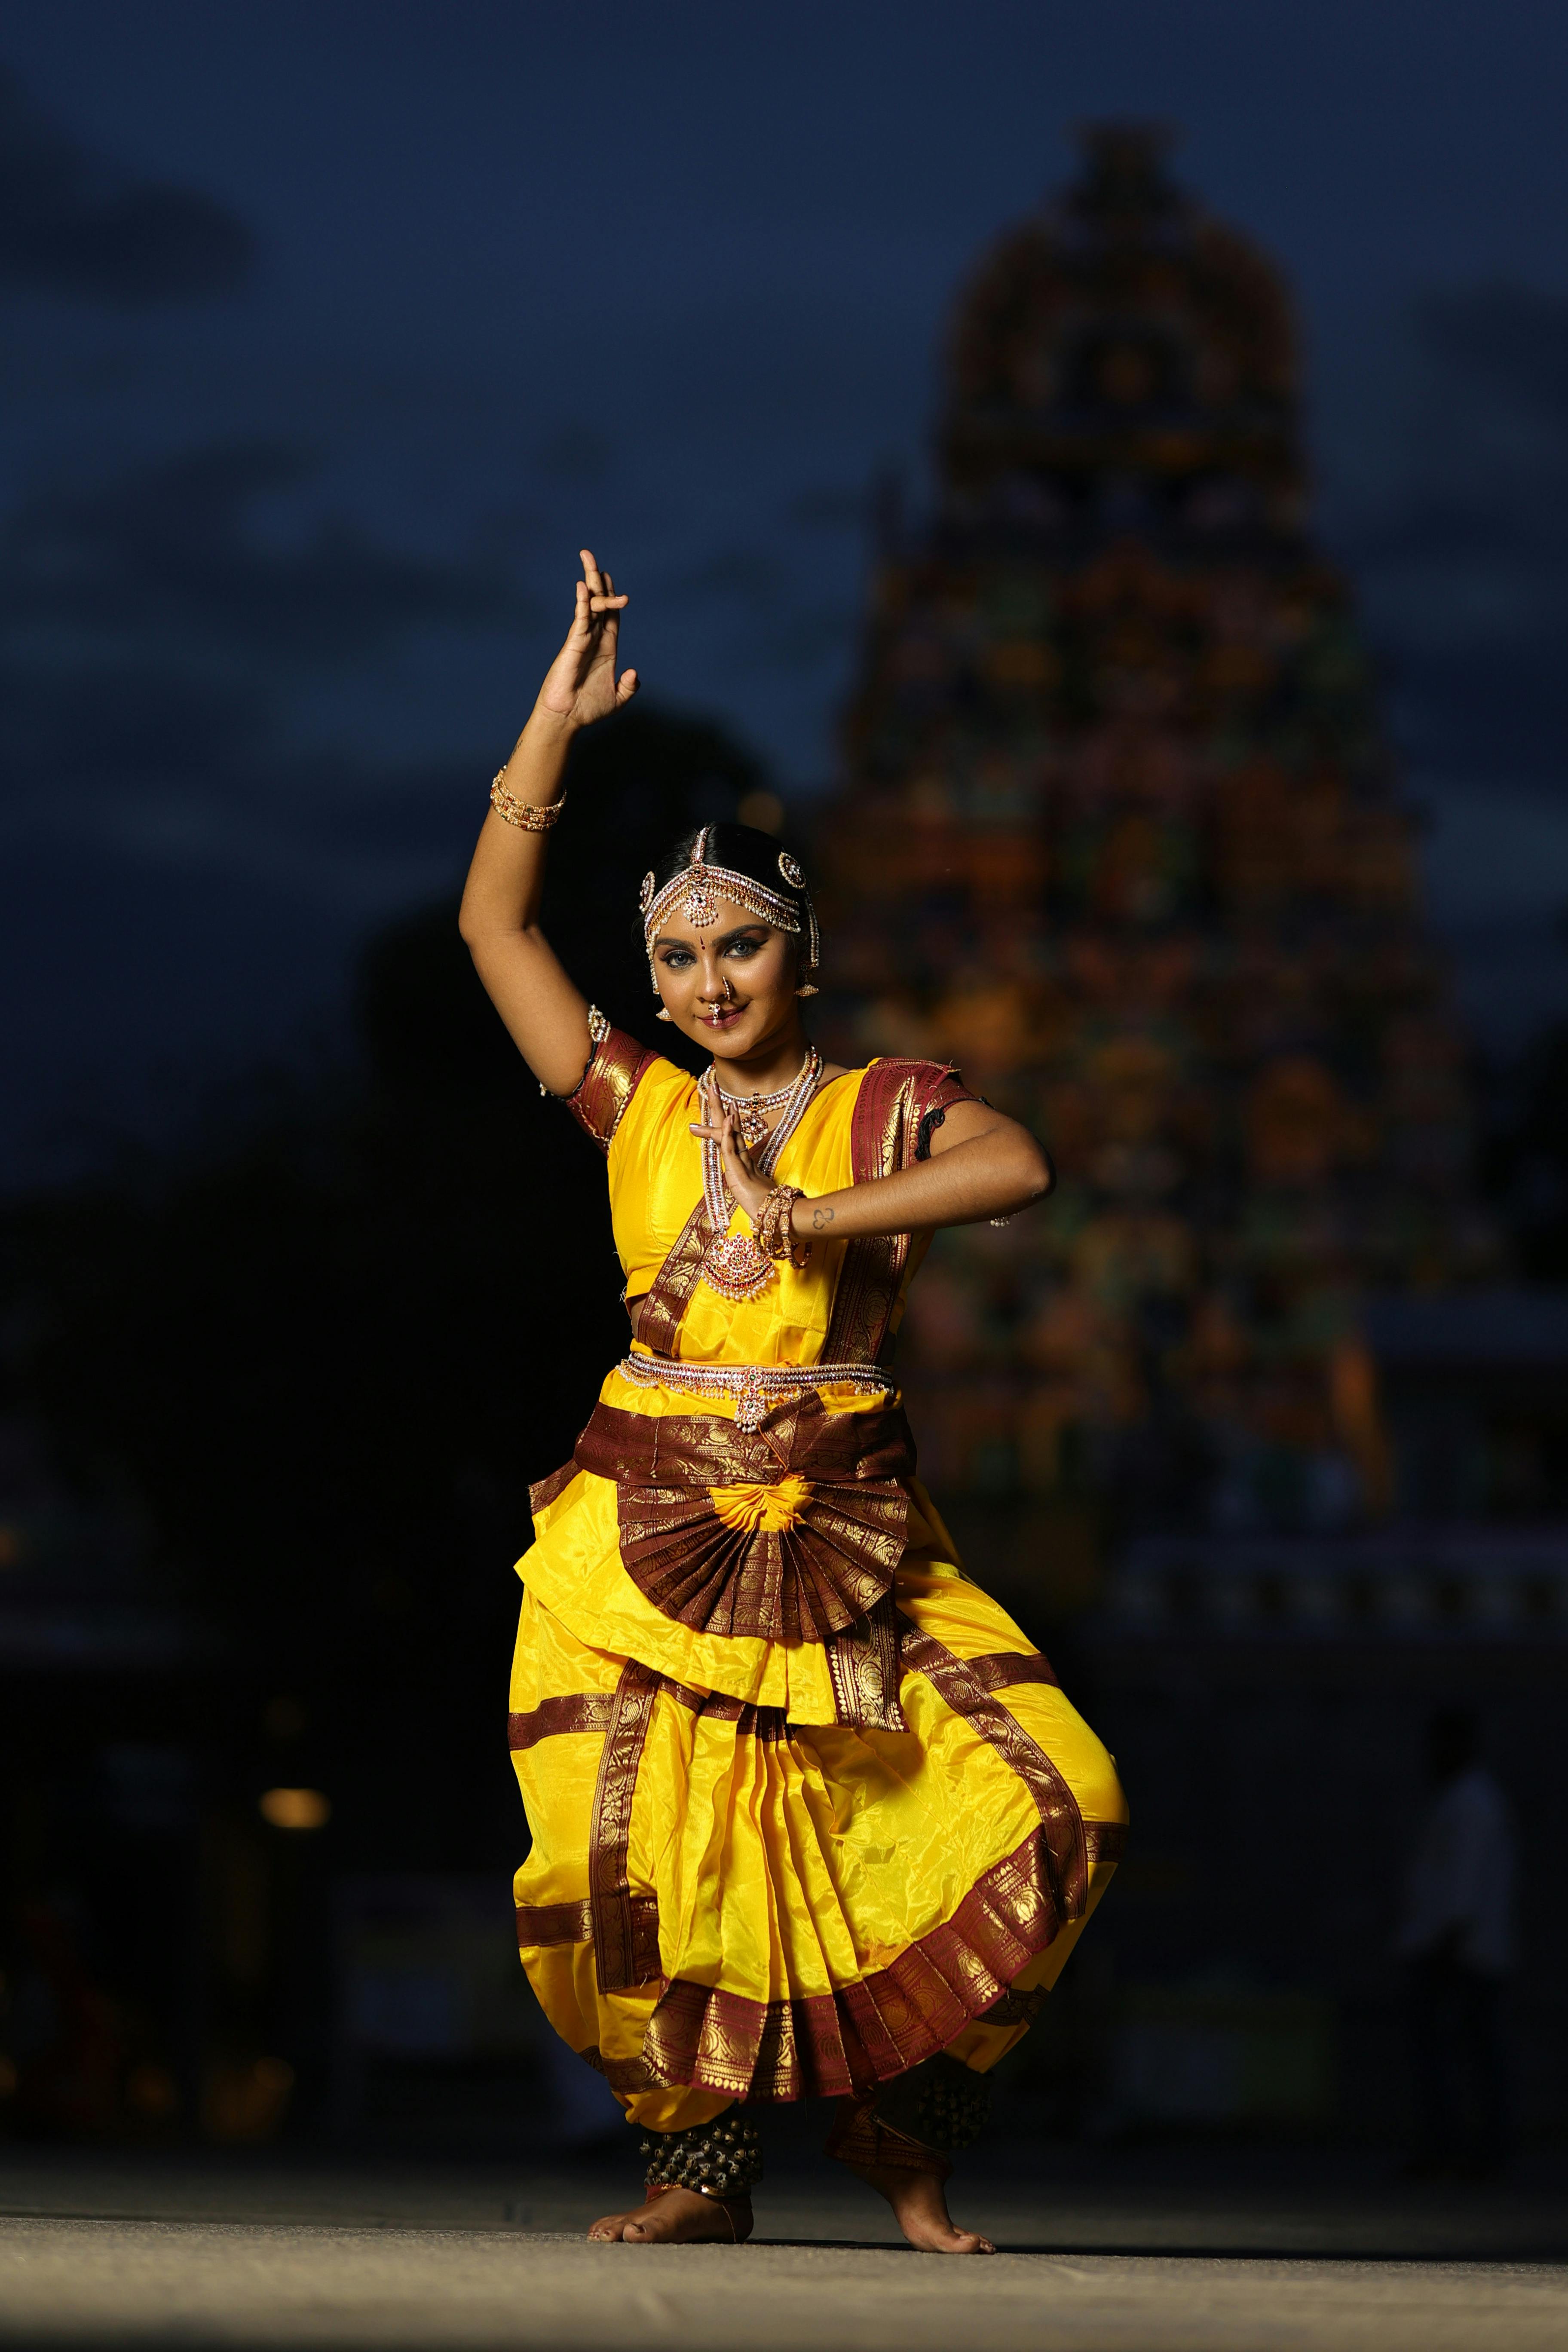 Dancer's Profile – THE DANCE INDIA